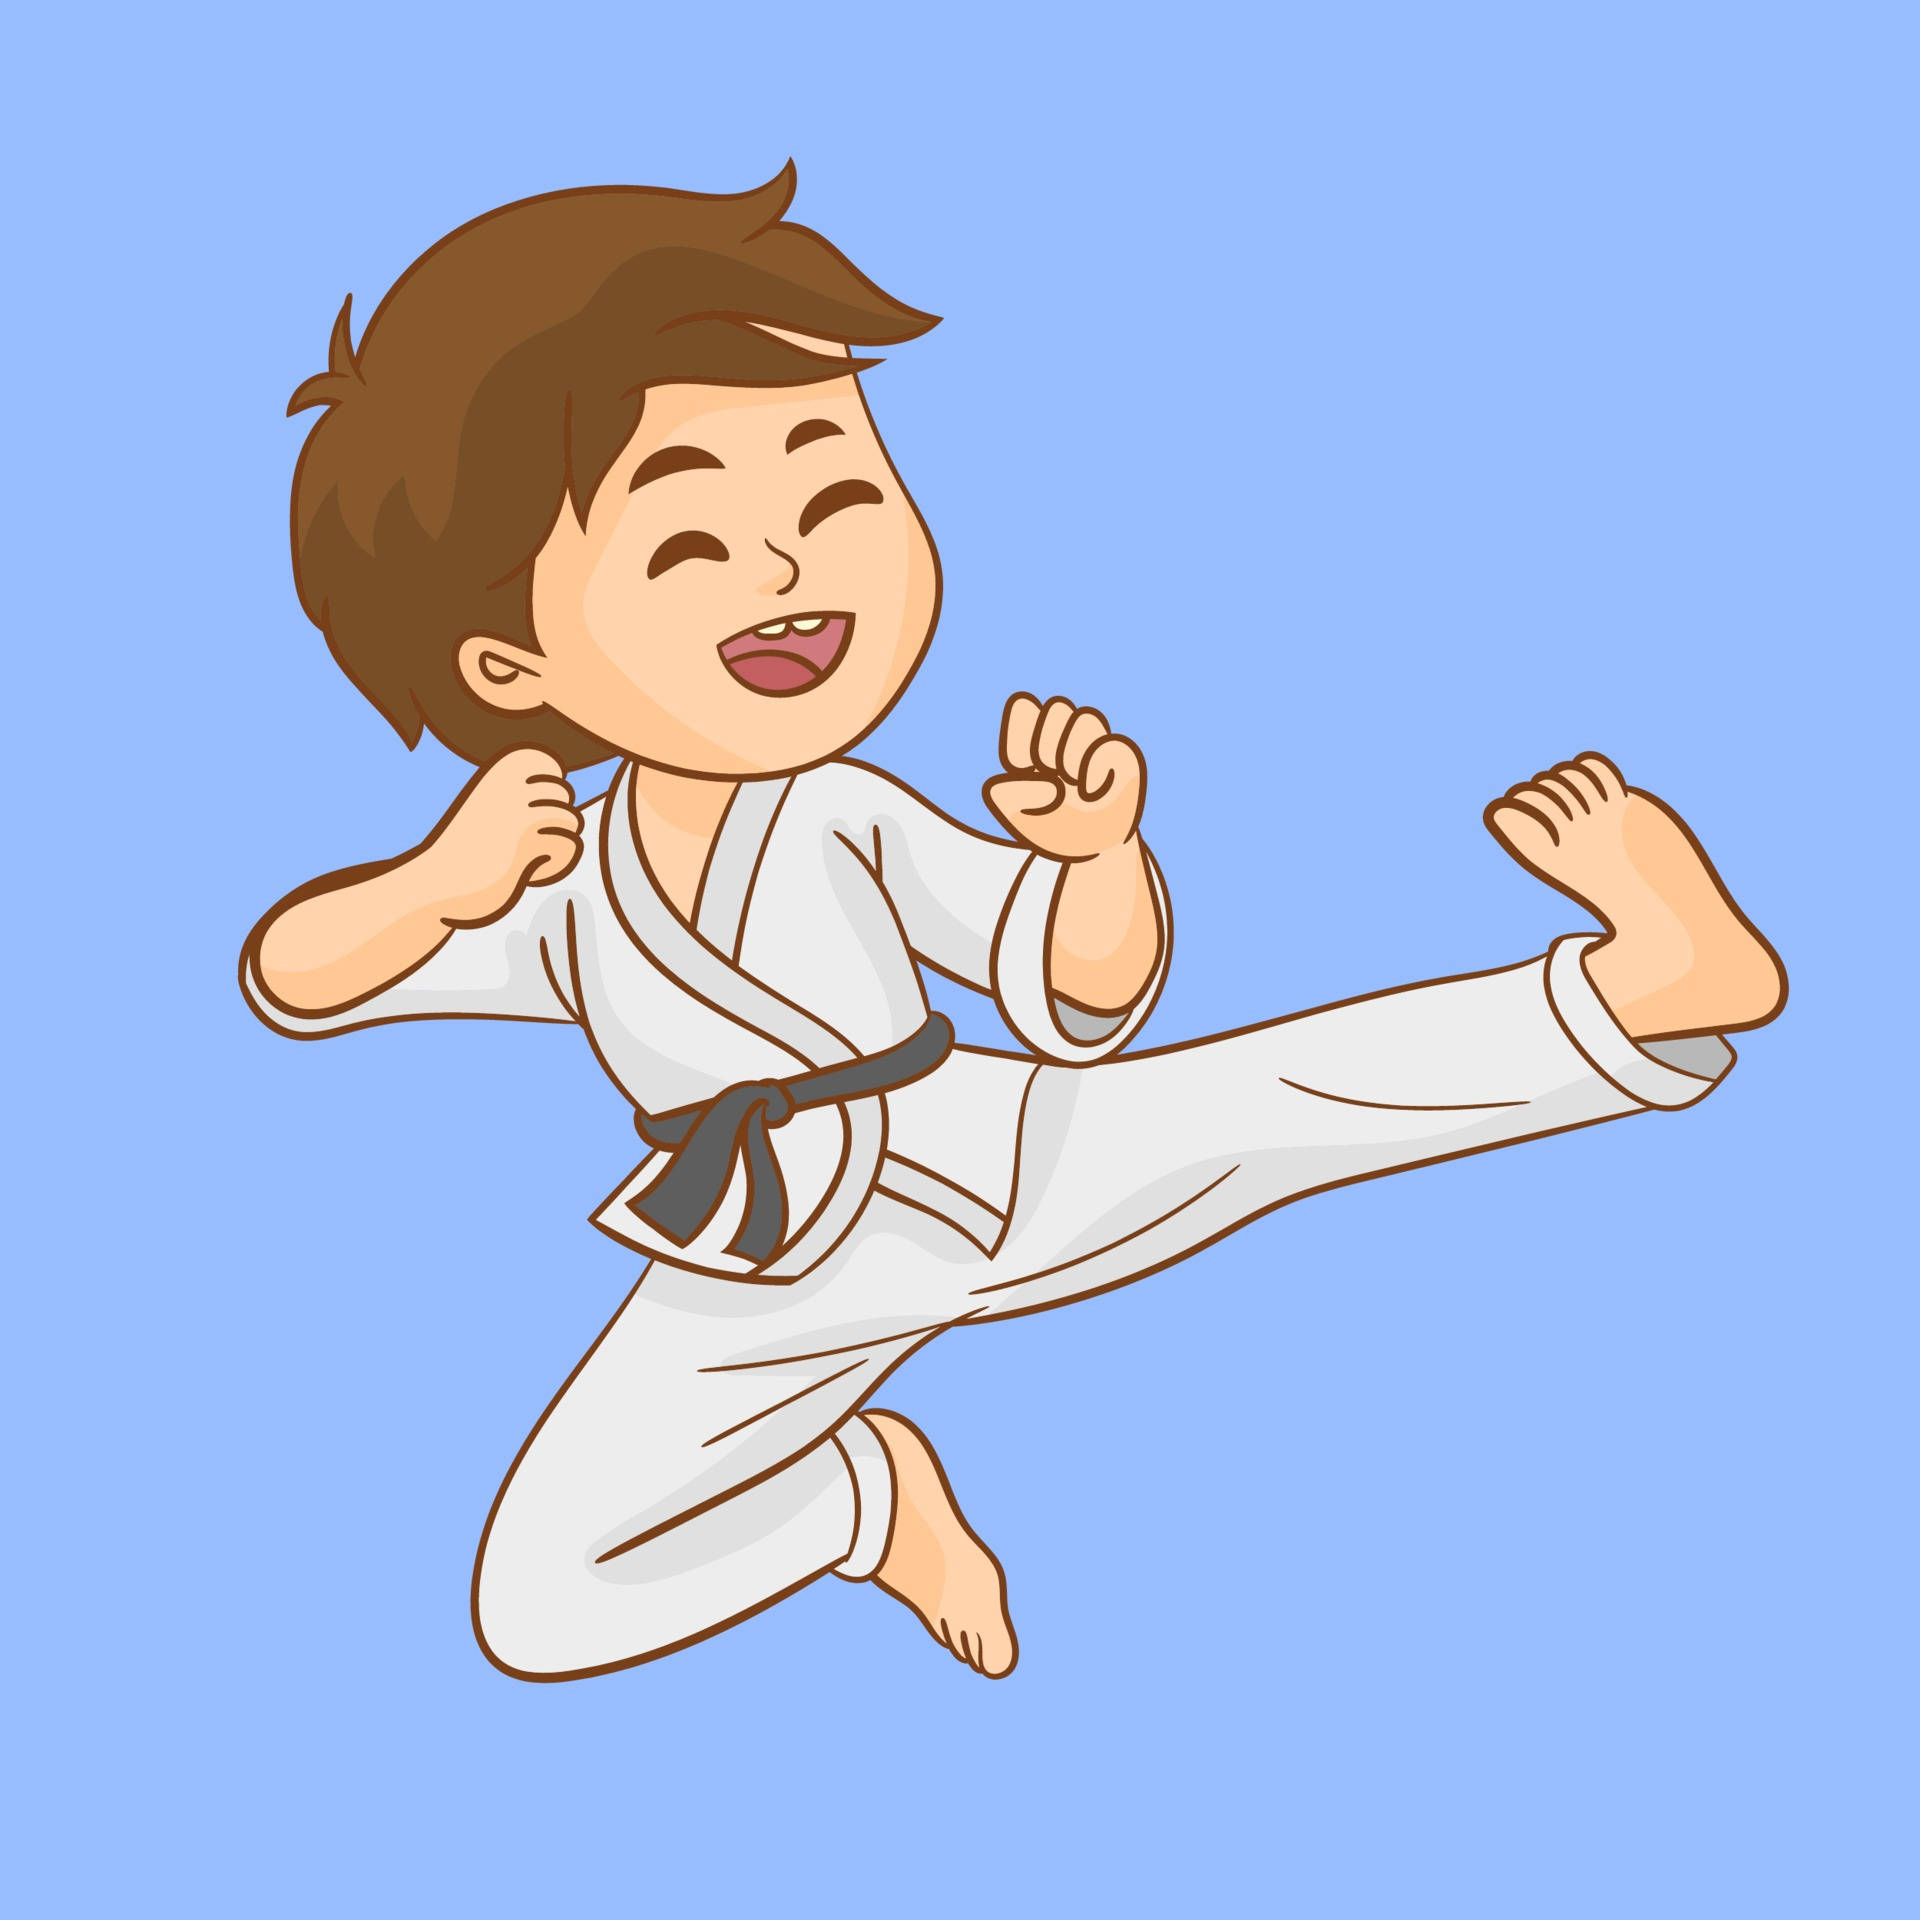 karate kick cartoon